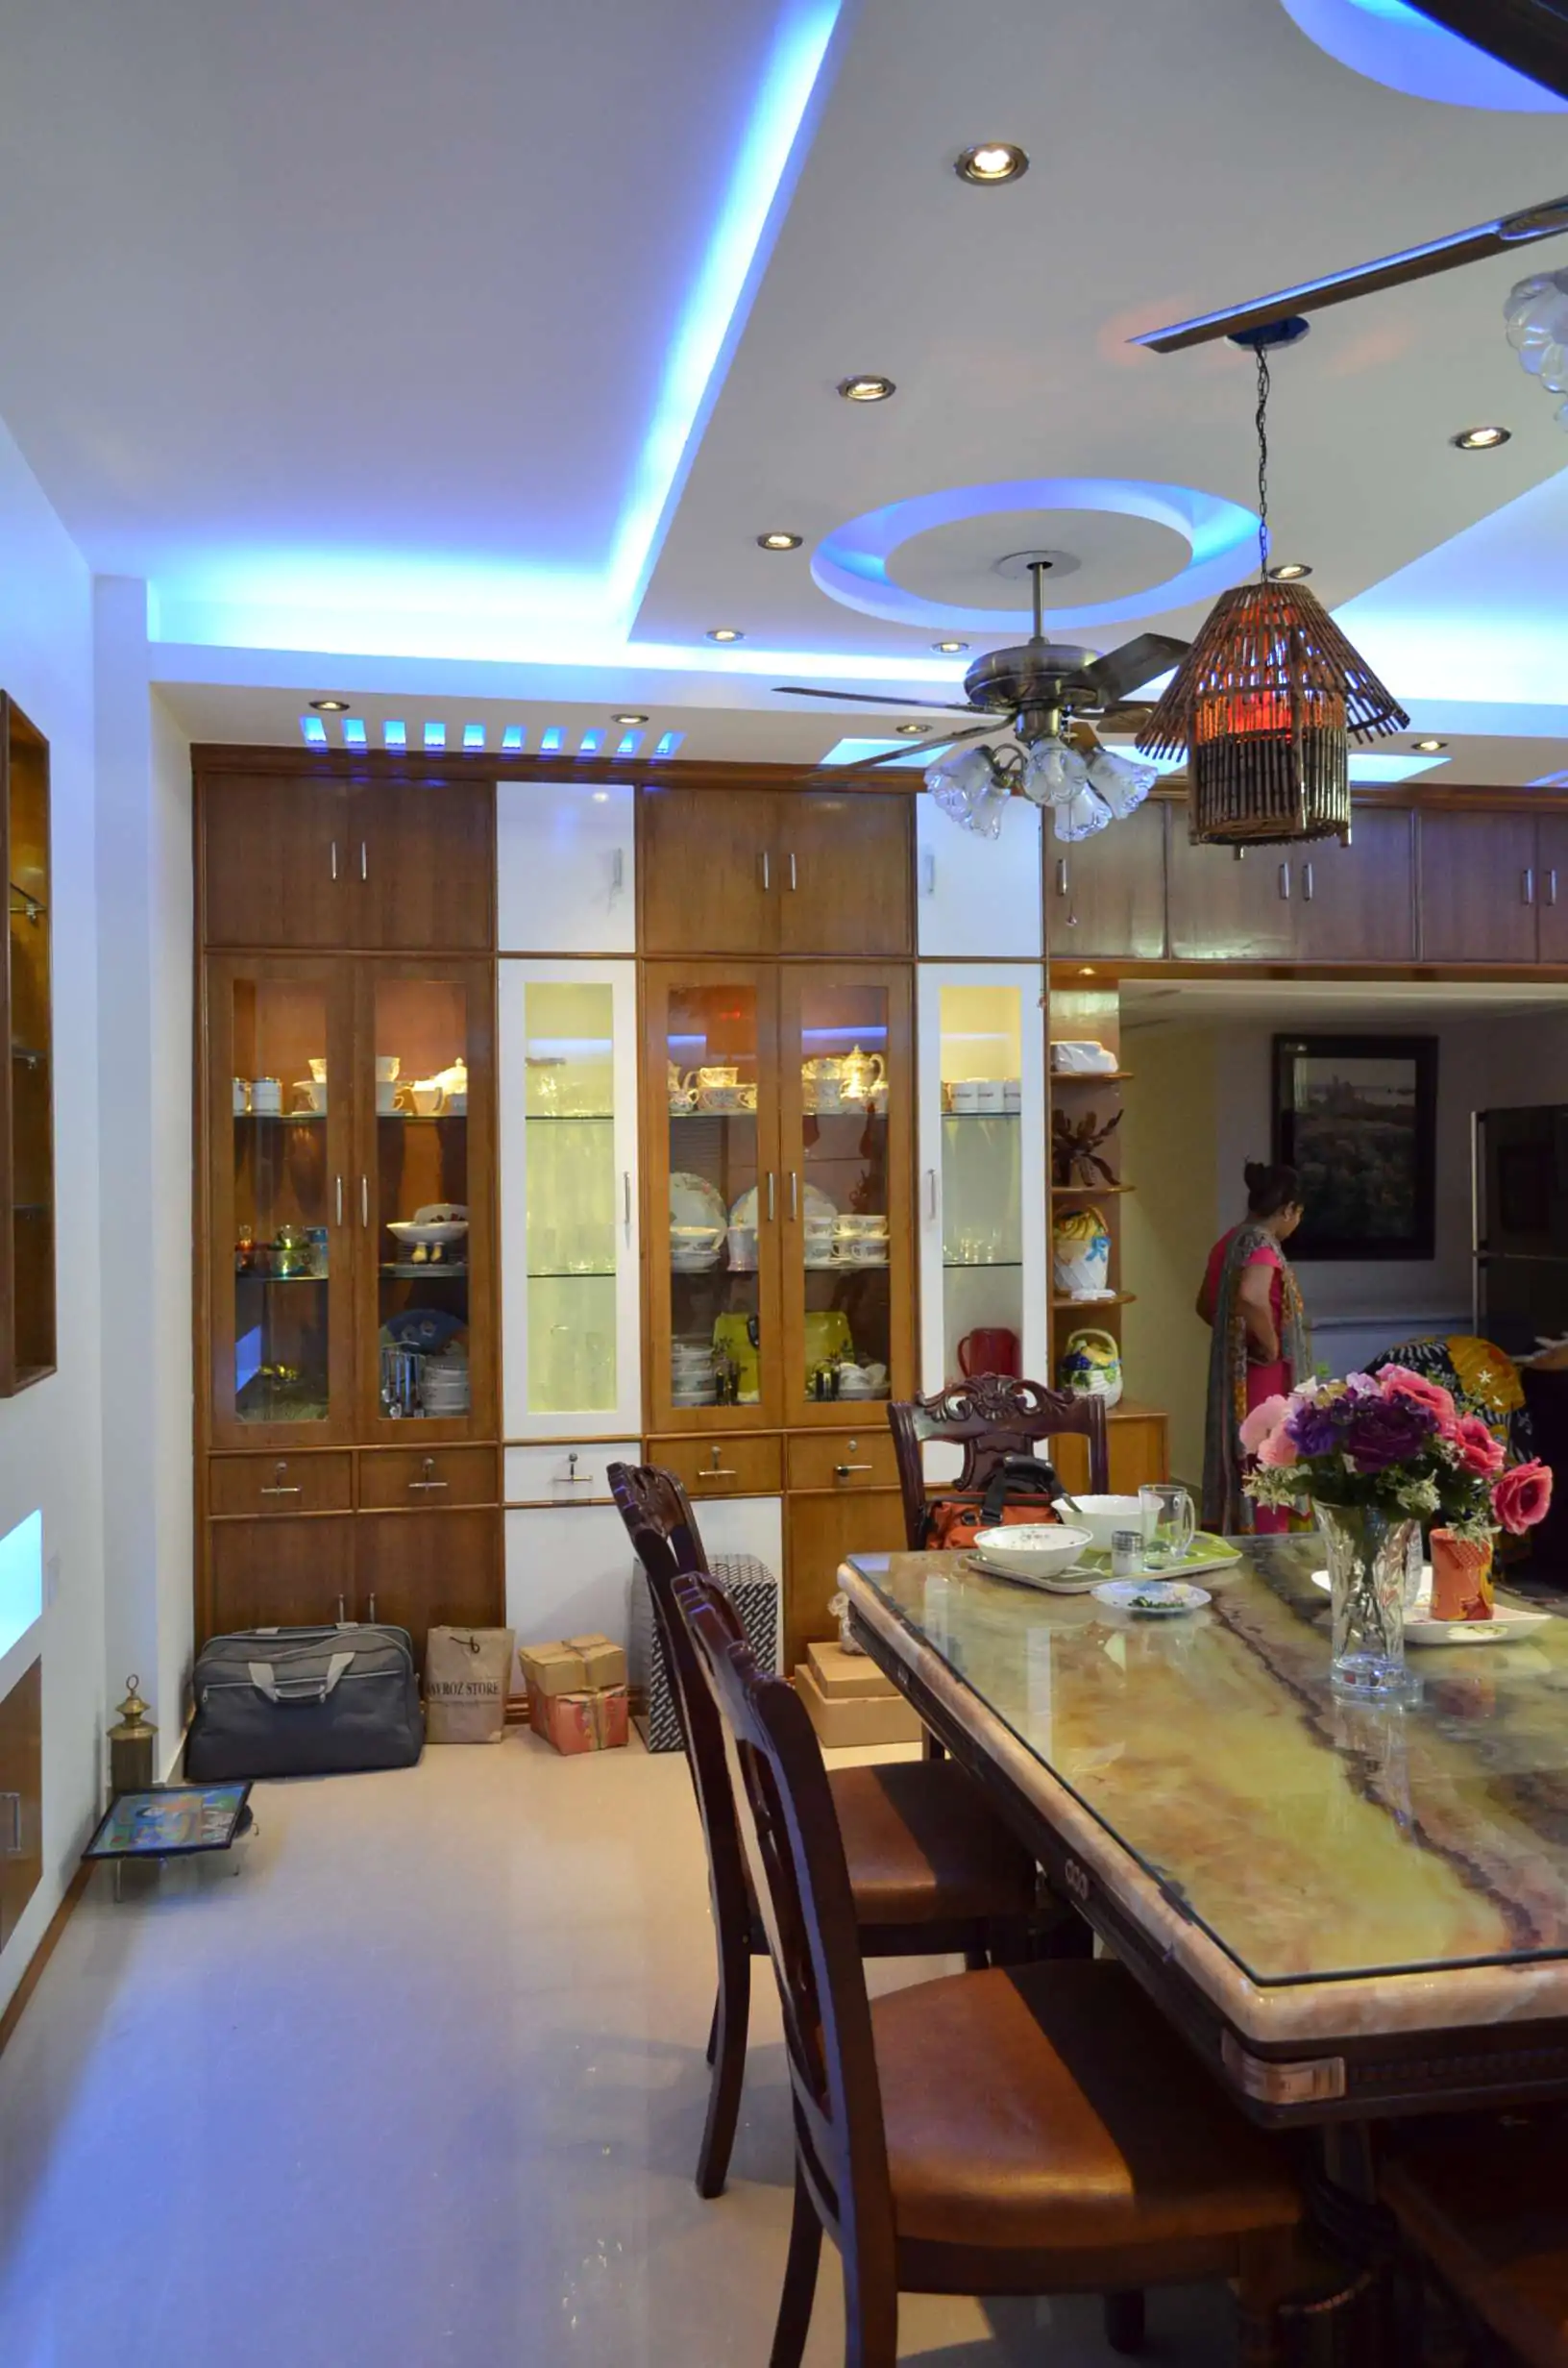 Masud Alam Dhanmondi Complete Project Home Interior Design (18)